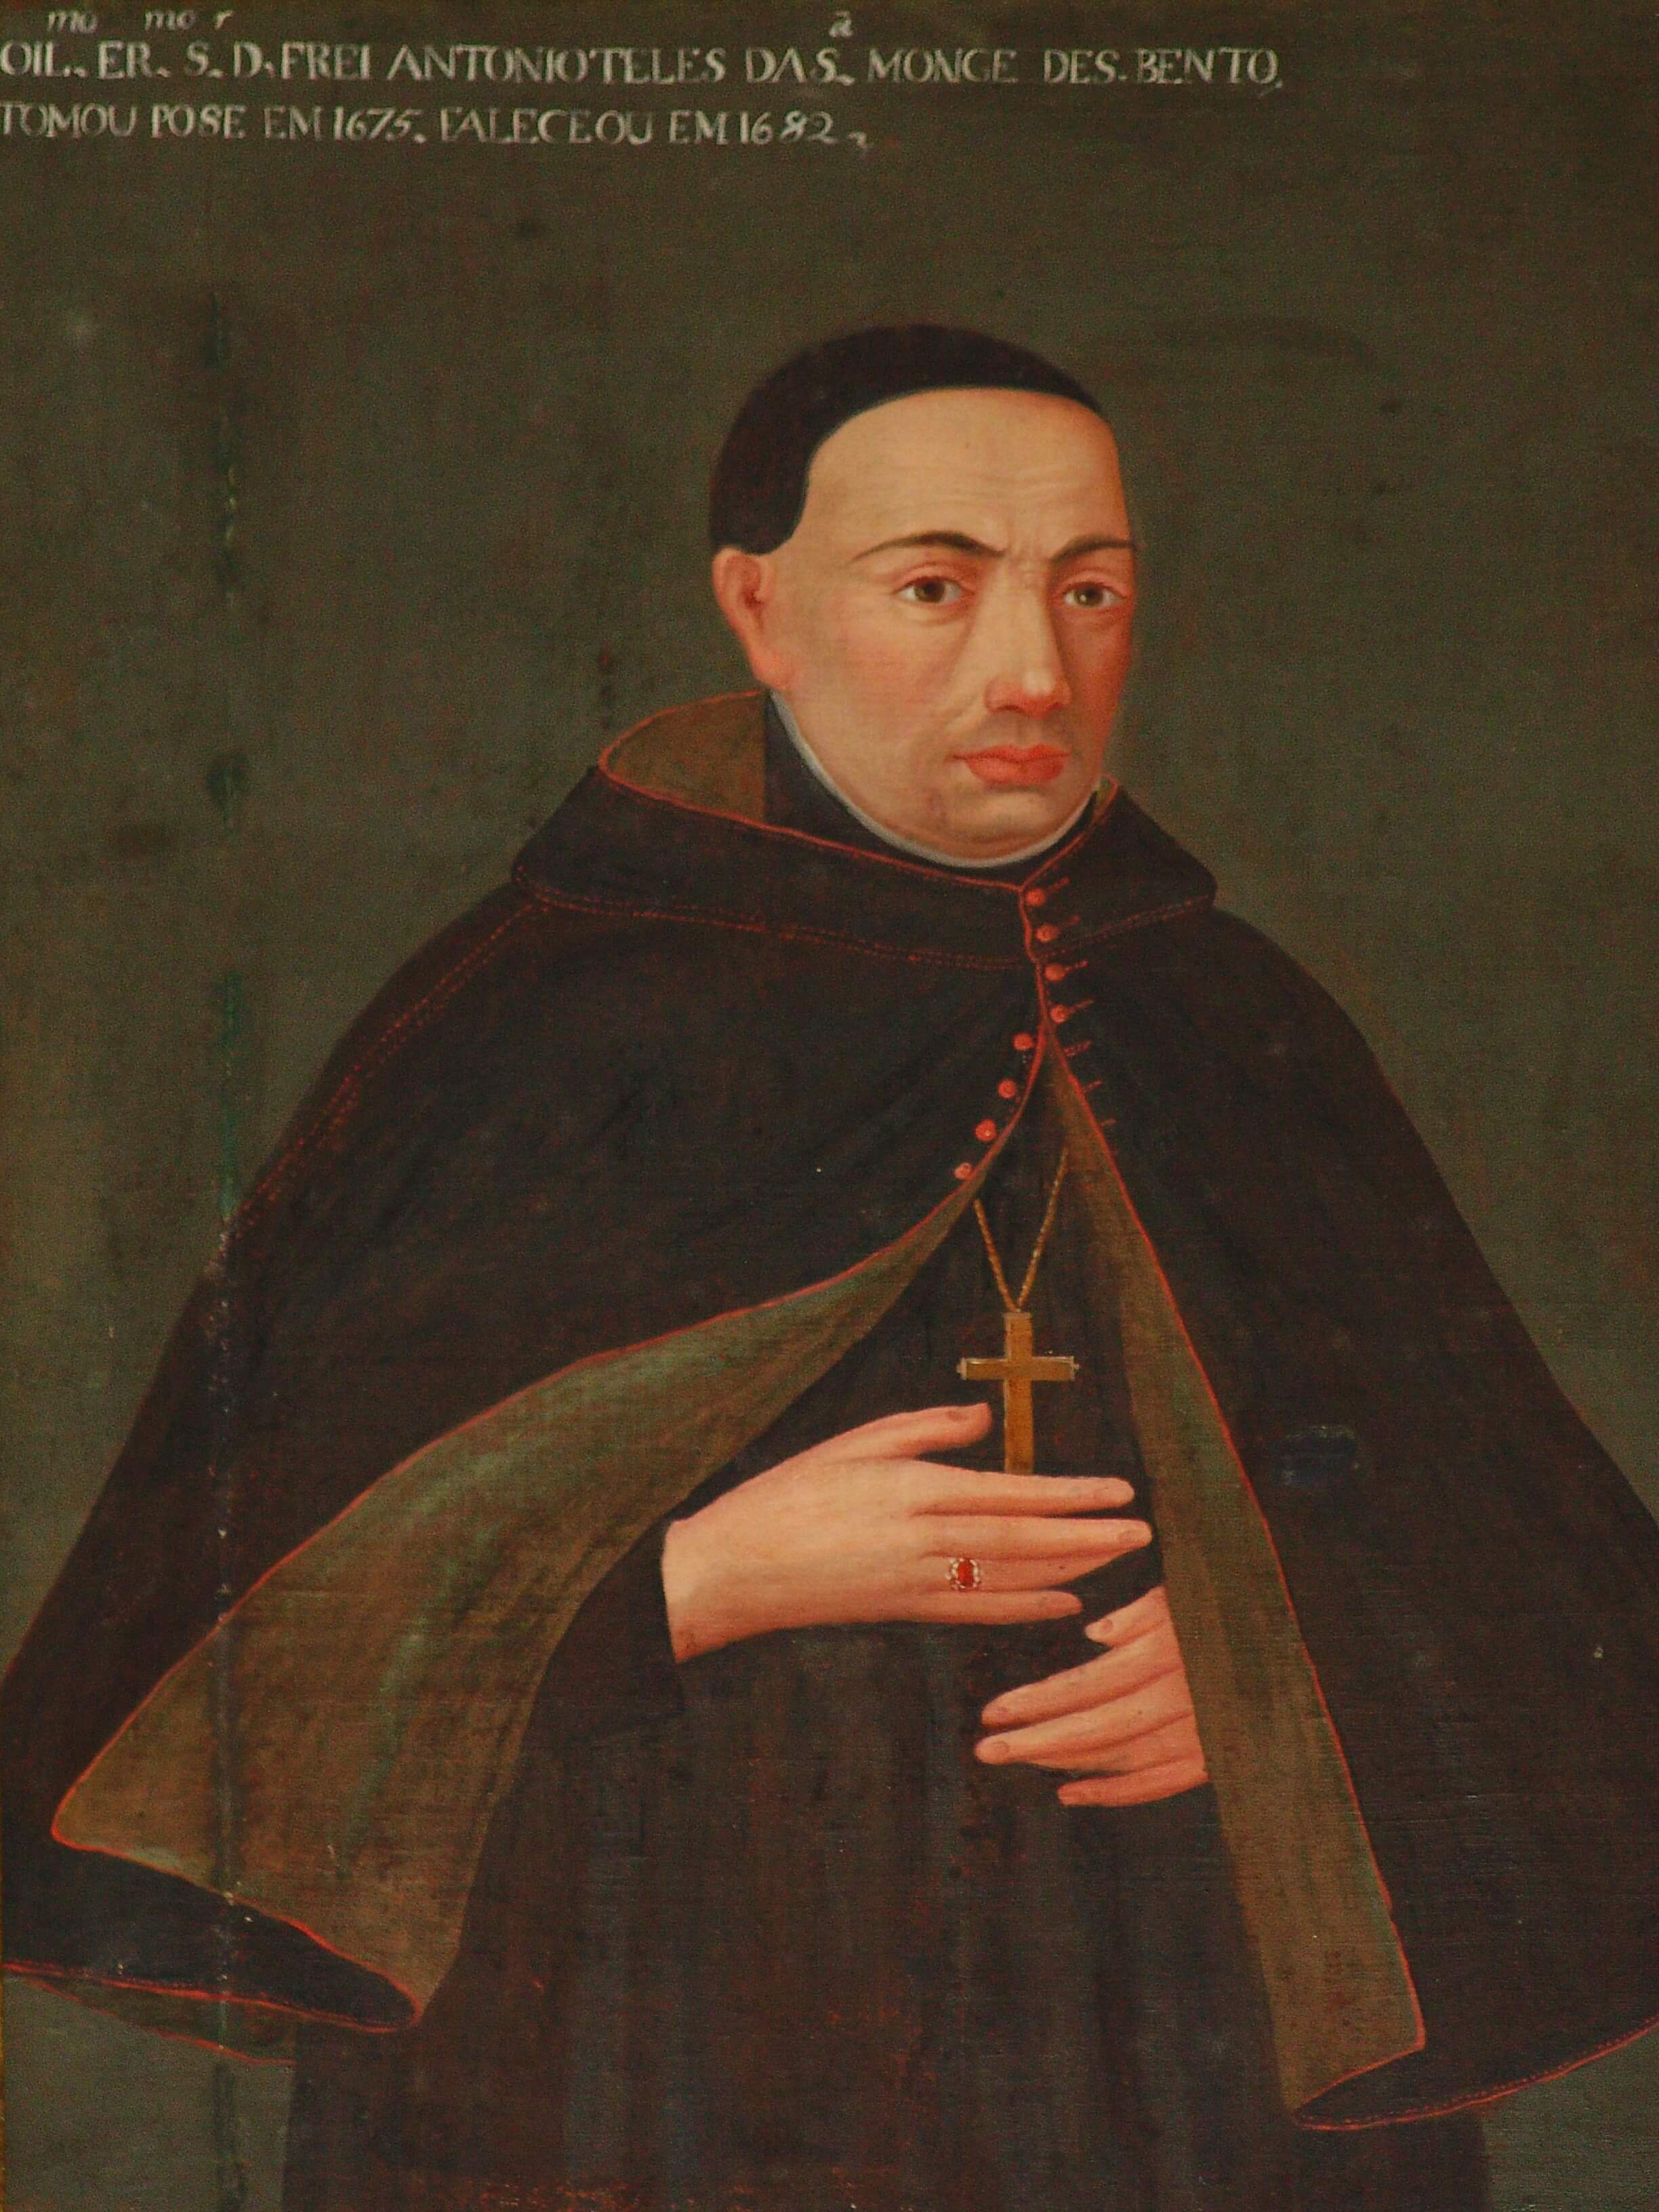 Portrait of D. Fr. Antonio Teles da Silva